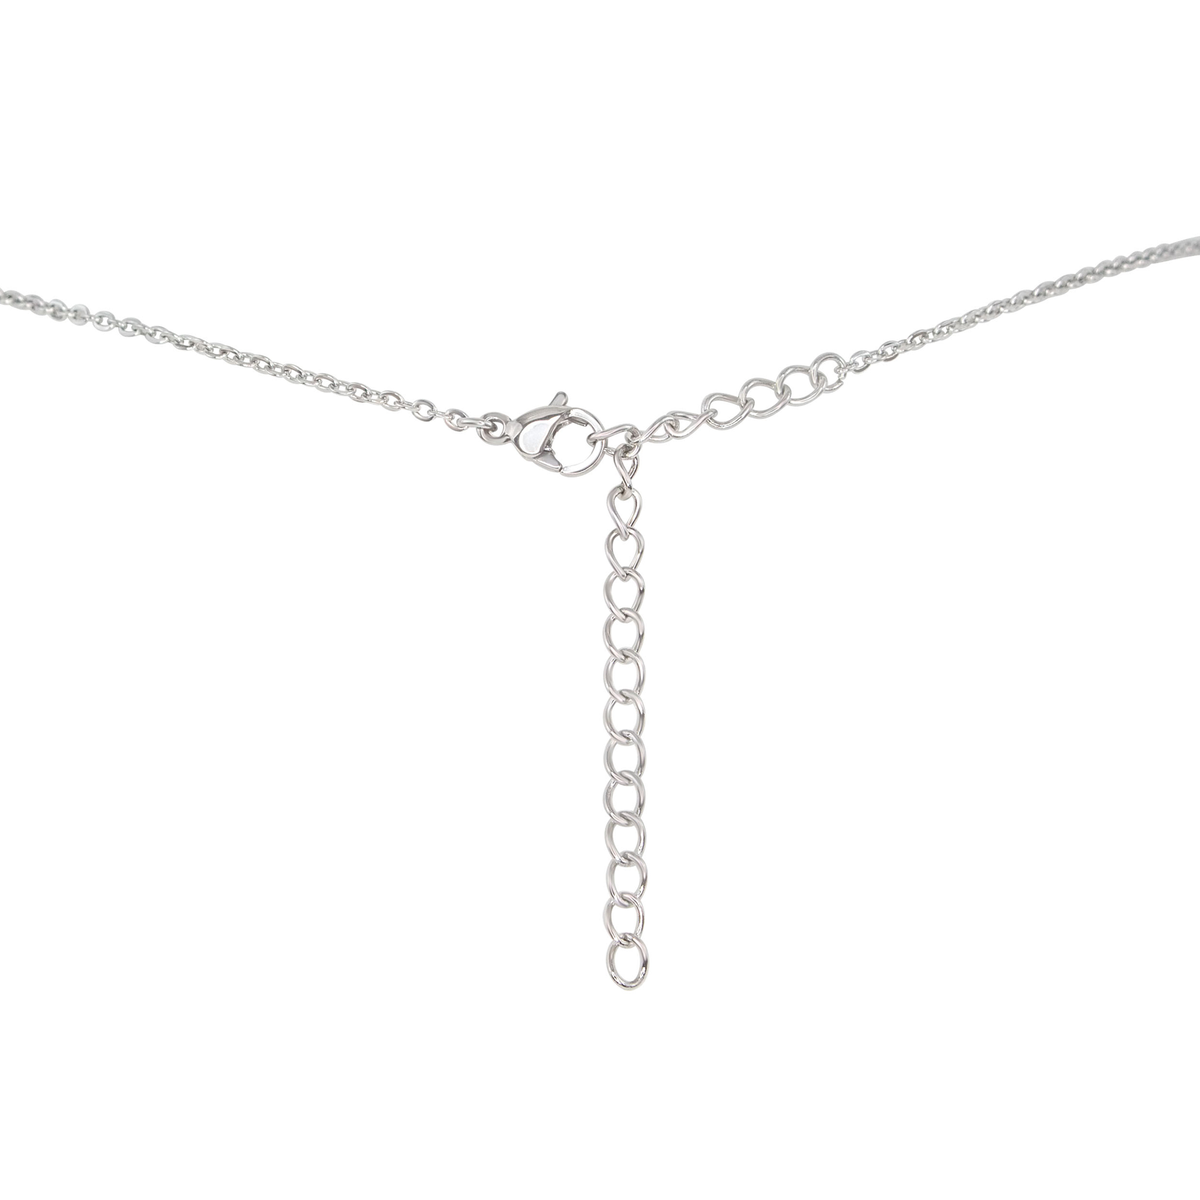 Tiny Raw Labradorite Pendant Necklace